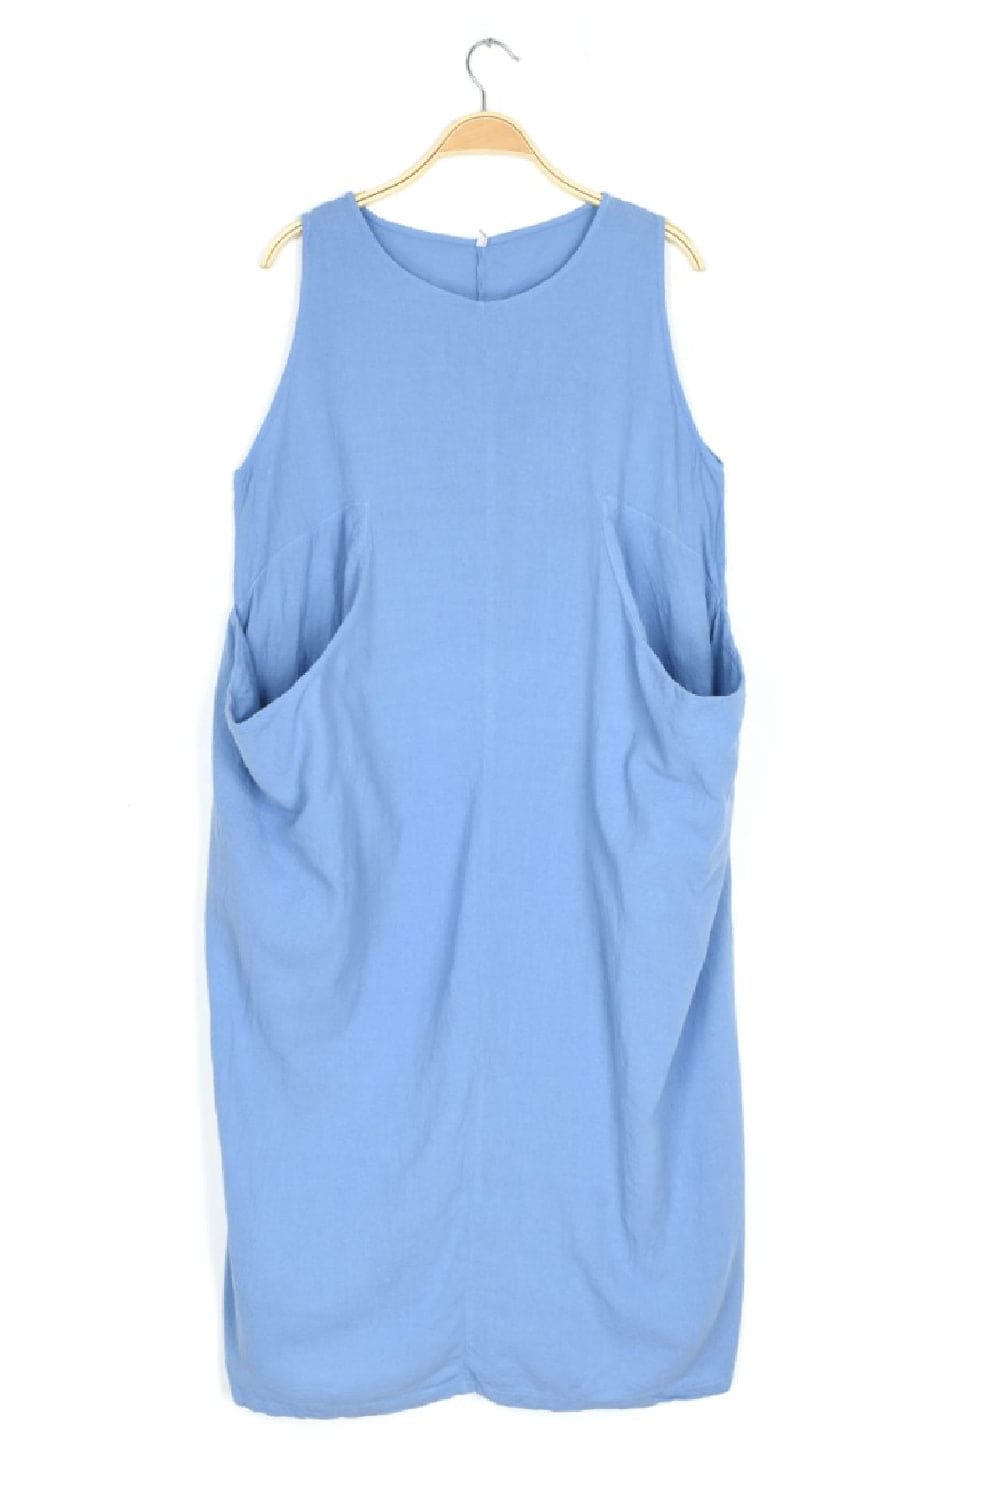 Sky blue cotton tank dress